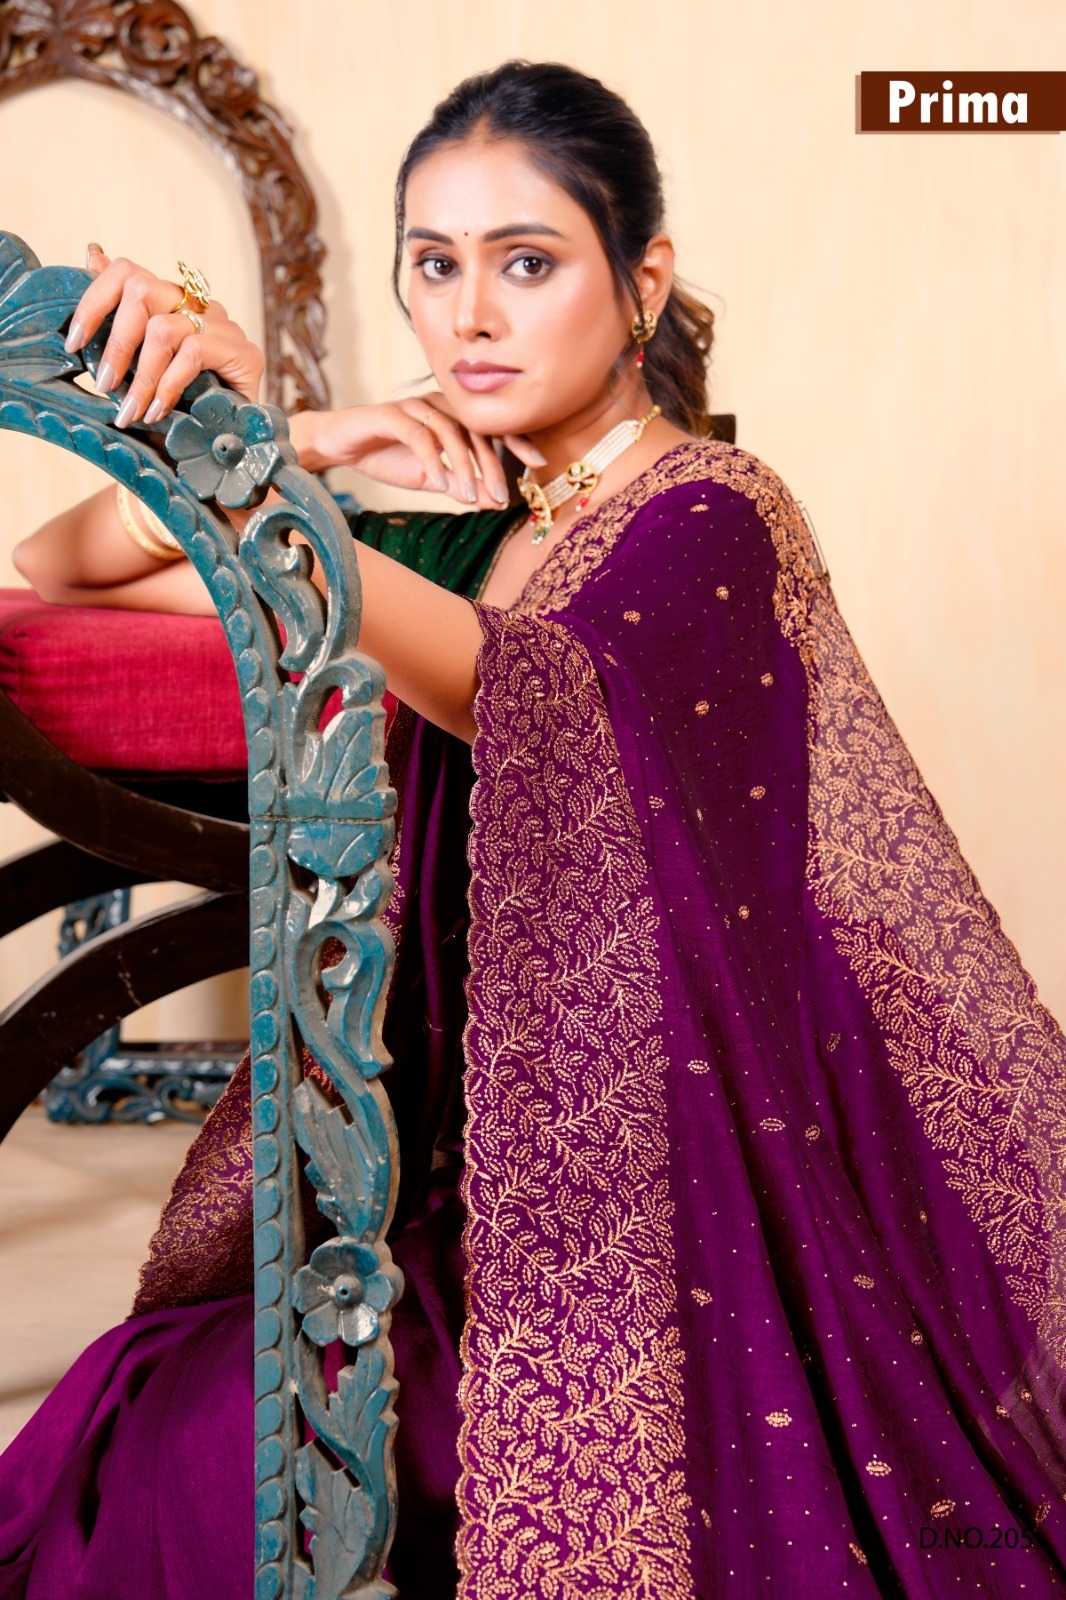 prima 201-205 hit design vichitra exclusive classy look saree with blouse 